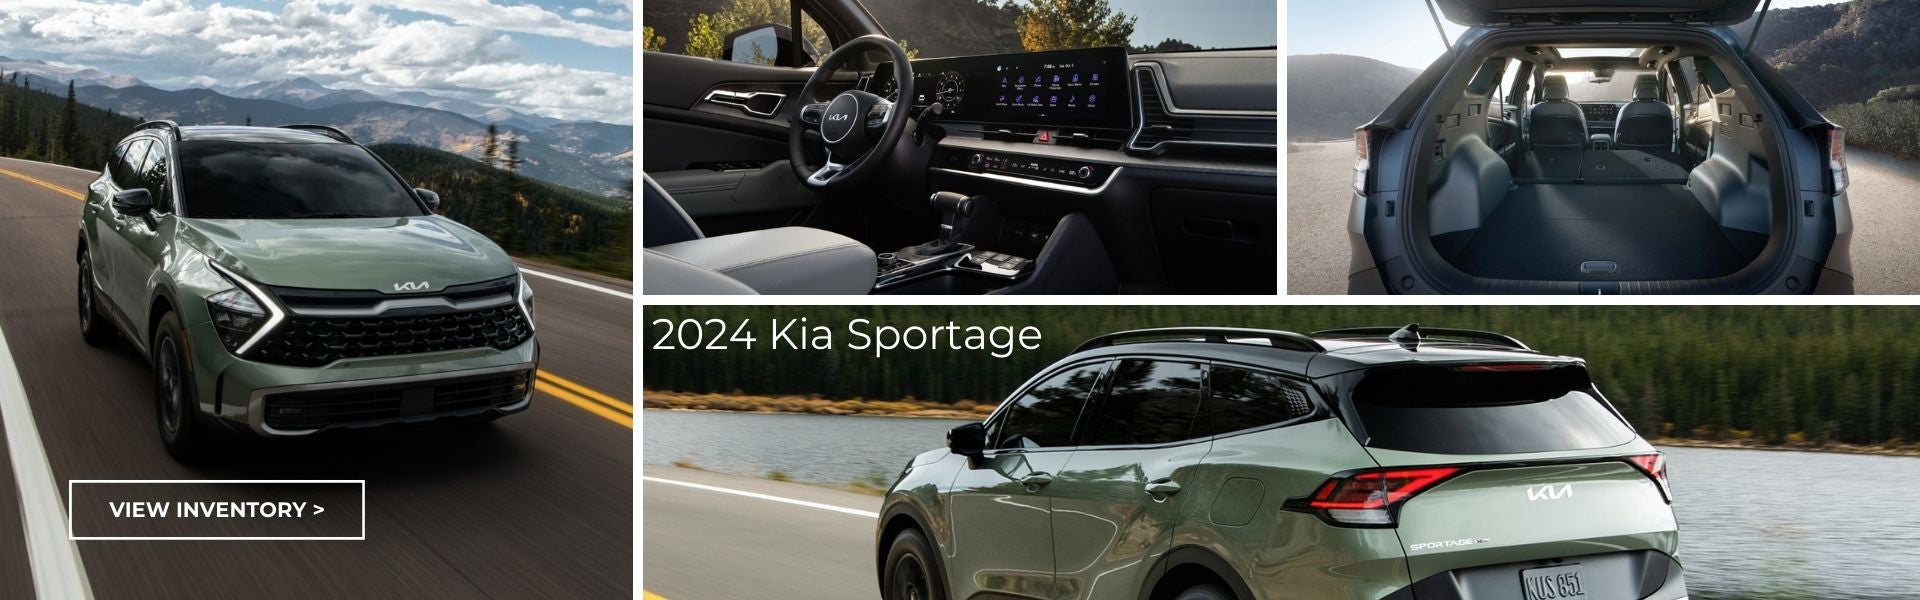 2024 Kia Sportage